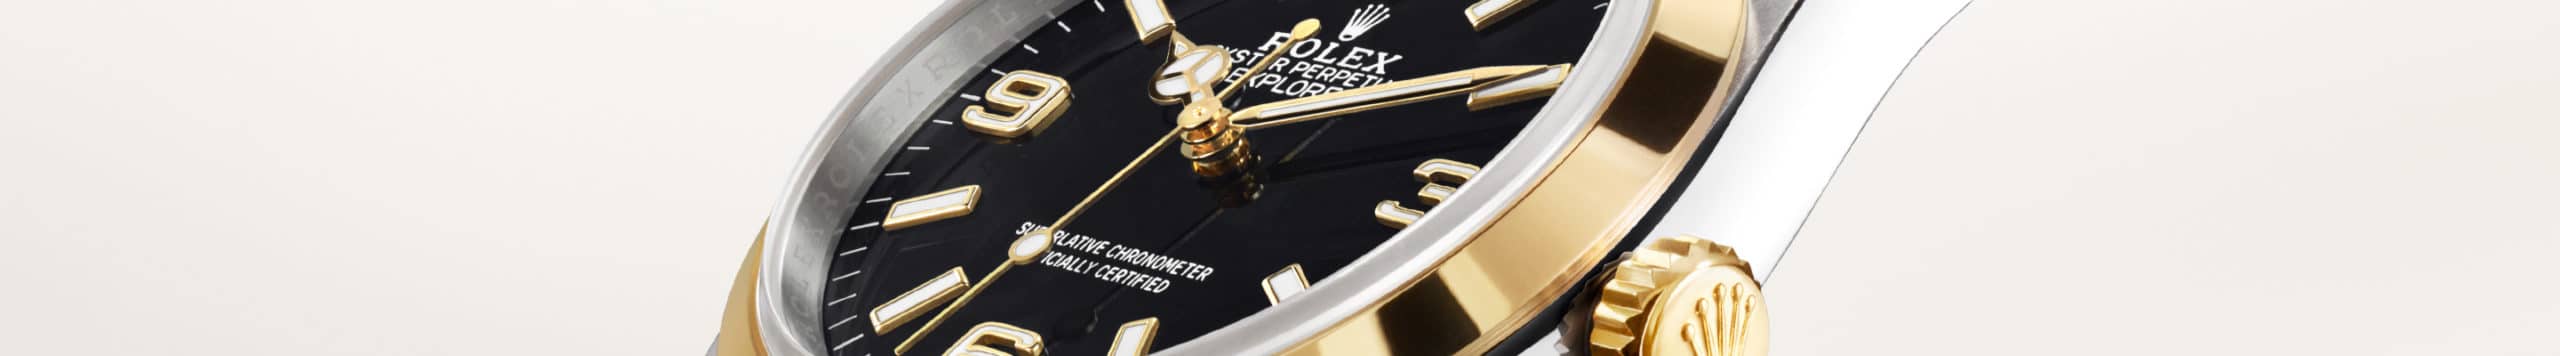 Explorer | Rolex Official Retailer - Srichai Watch